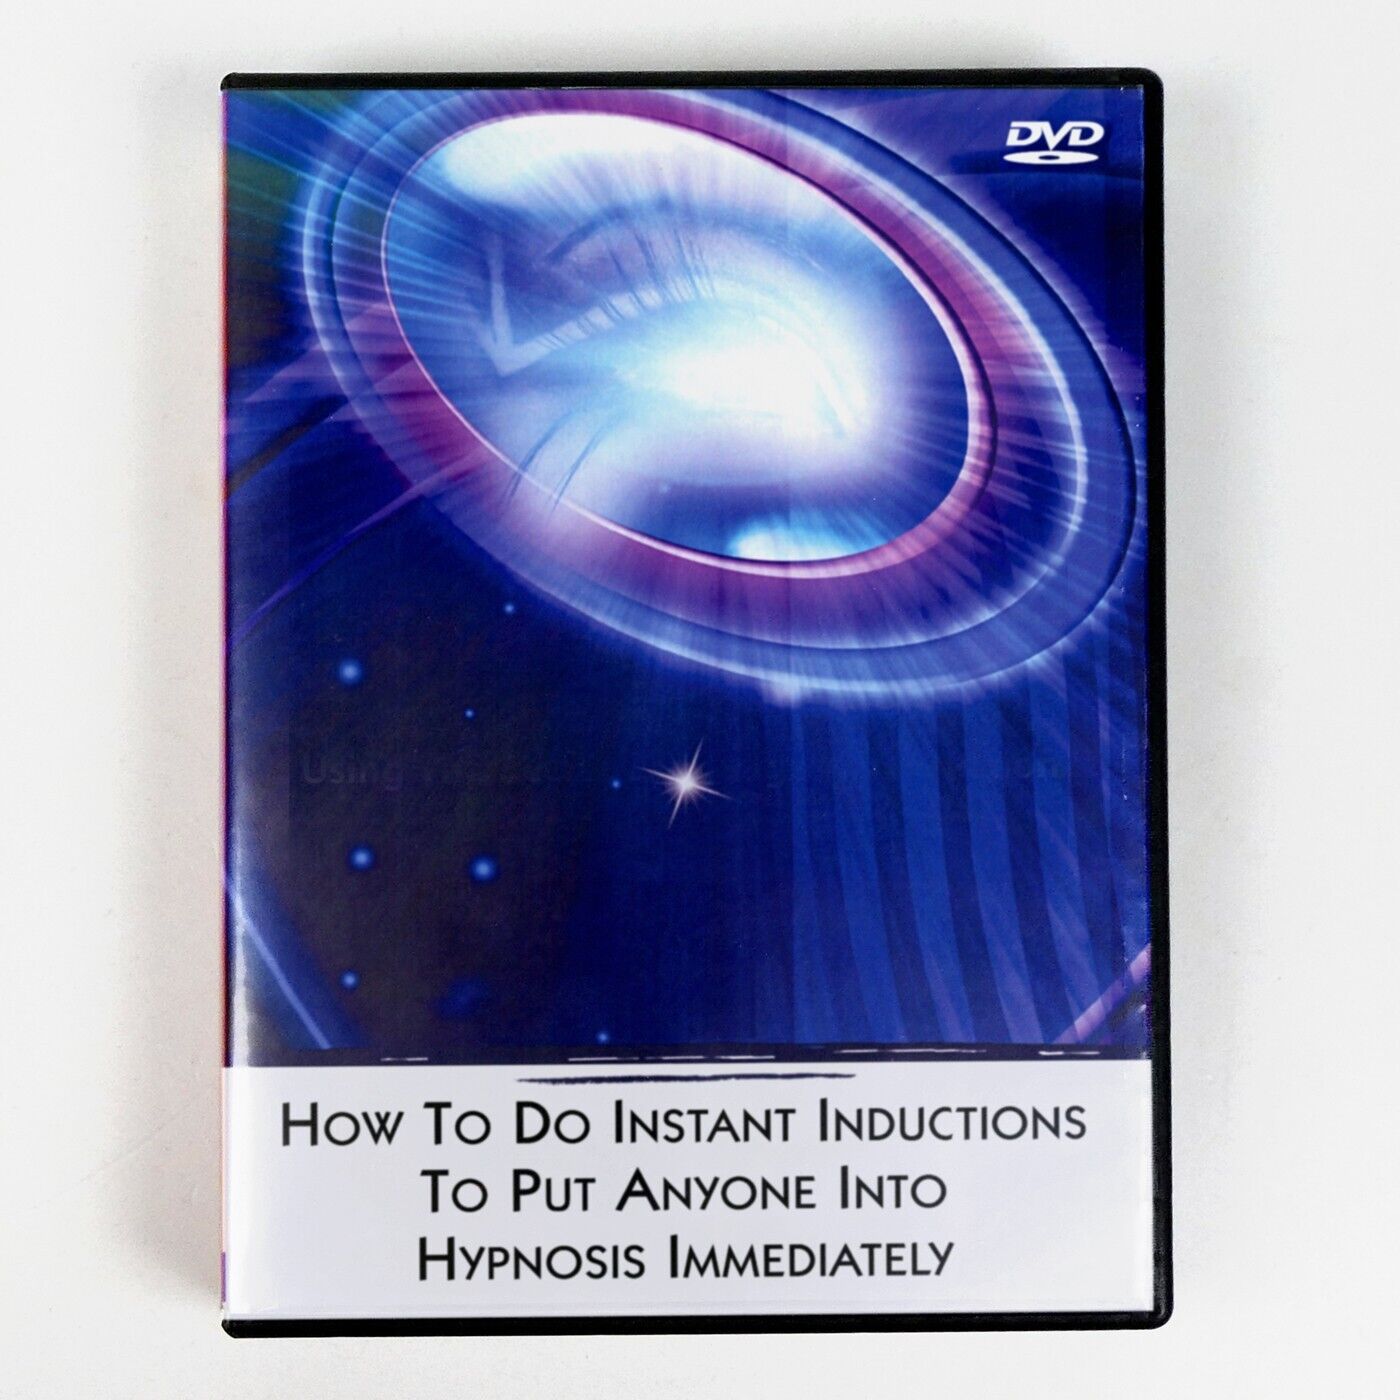 HOW TO DO INSTANT HYPNOSIS INDUCTIONS 2 DVD Igor Ledochowski Rapid Hypnotism